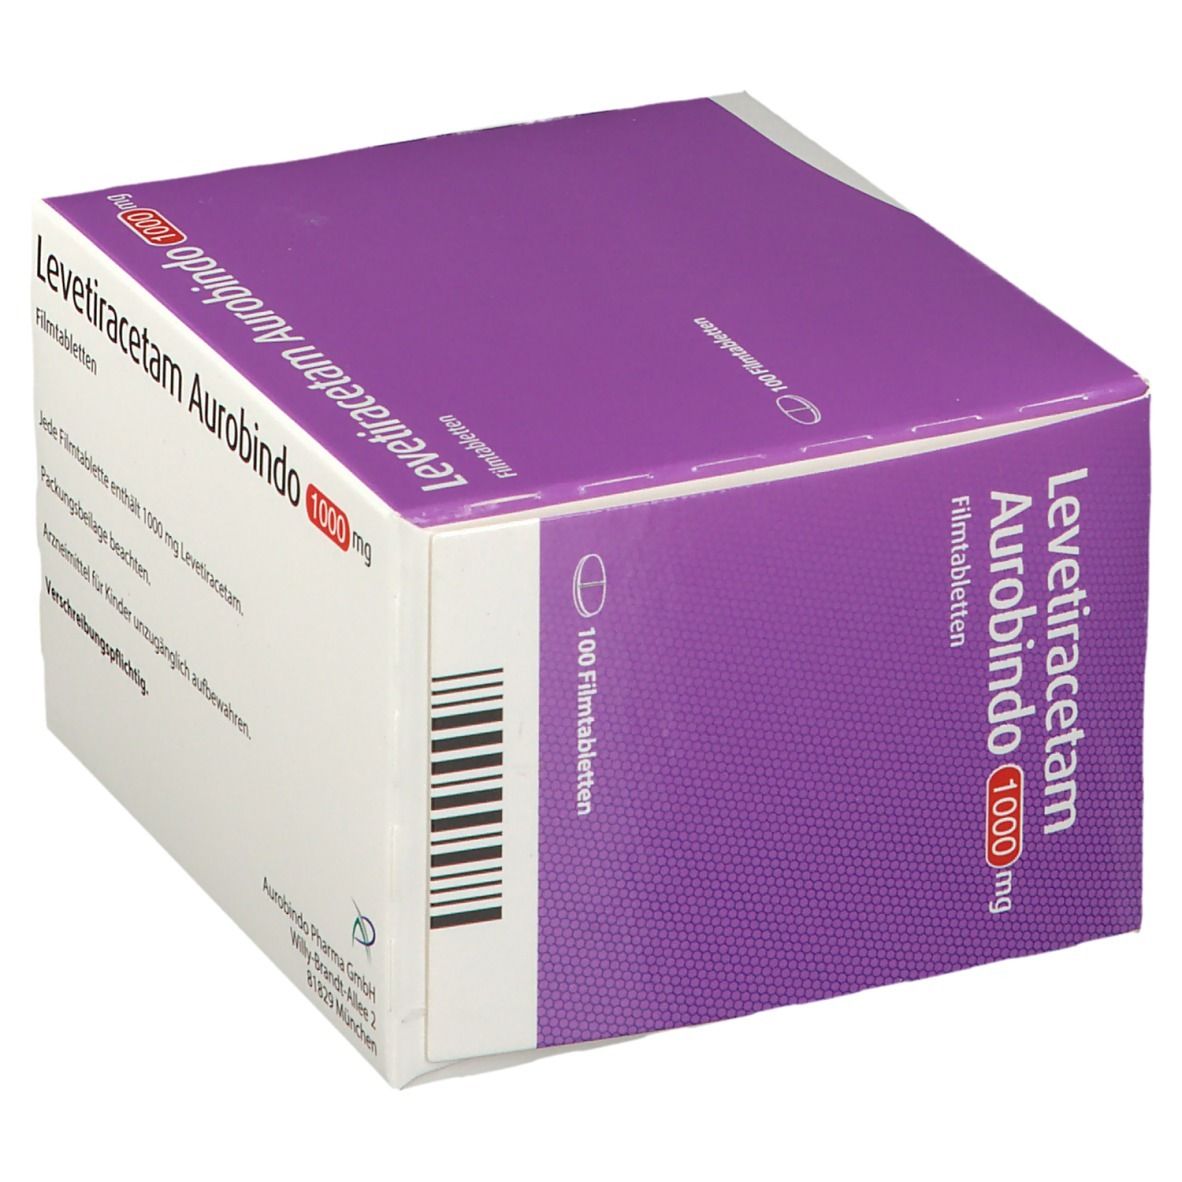 Levetiracetam Aurobindo 1000 mg